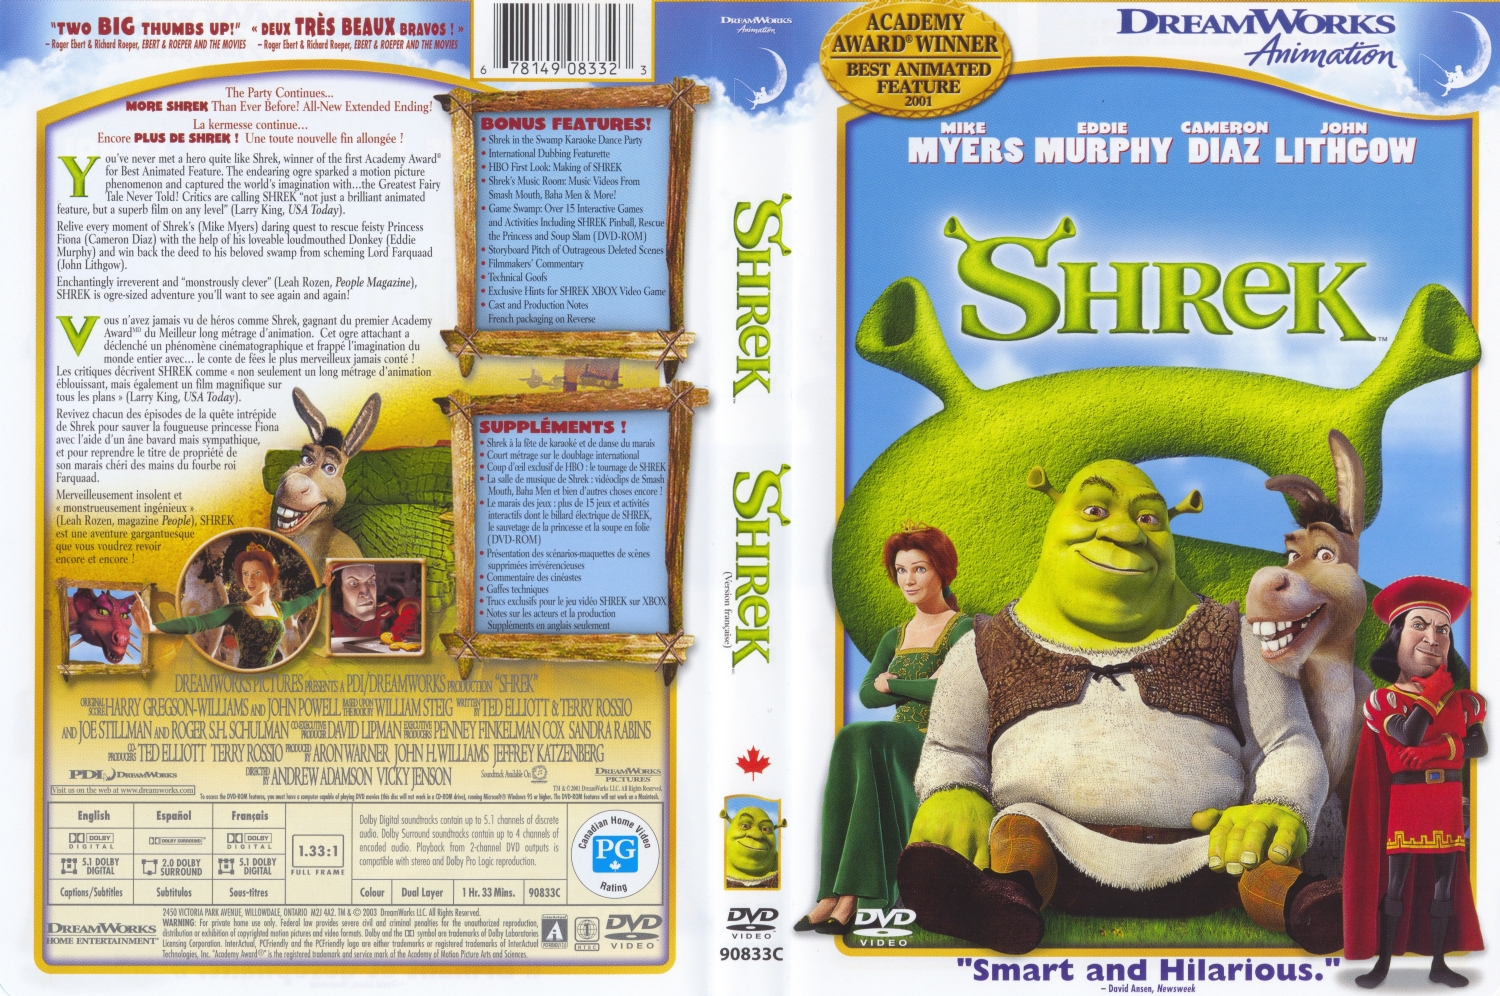 Covers Box Sk Shrek 2001 High Quality Dvd Blueray Movie